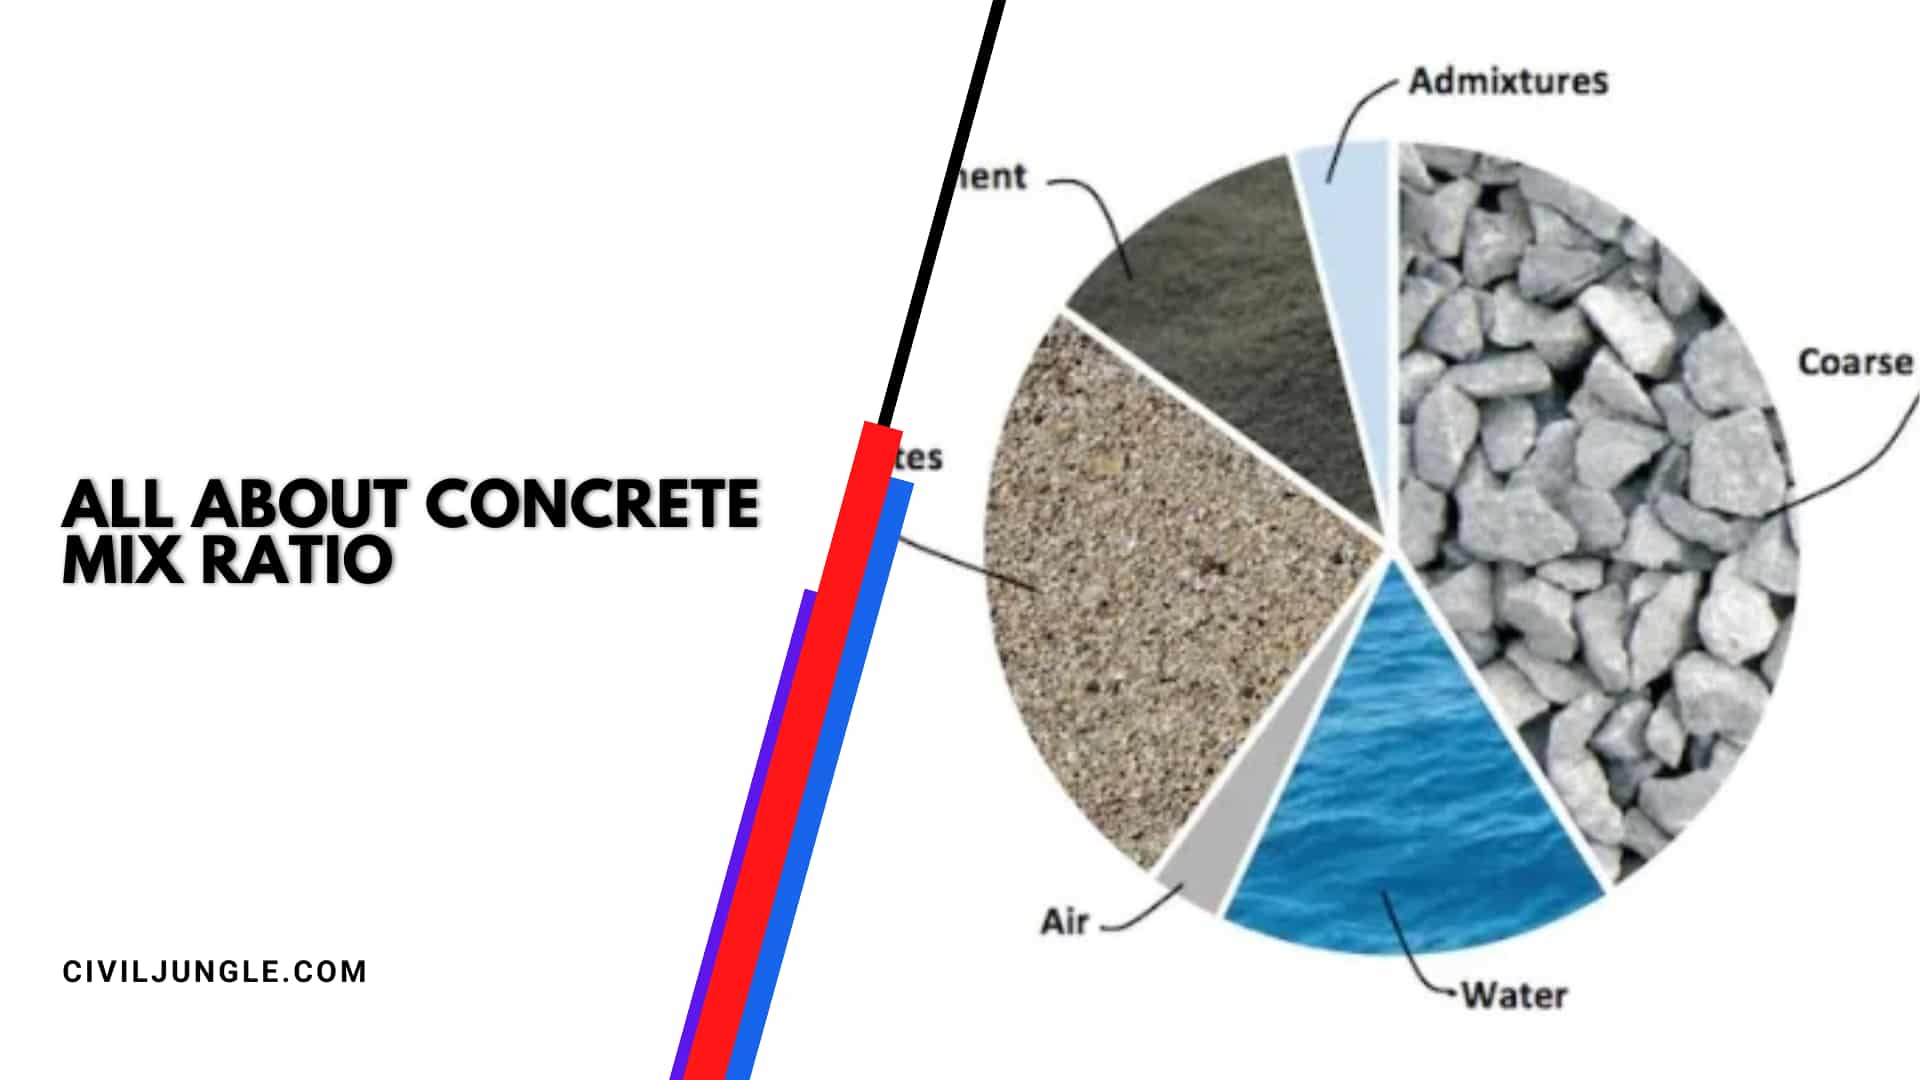 All About Concrete Mix Ratio